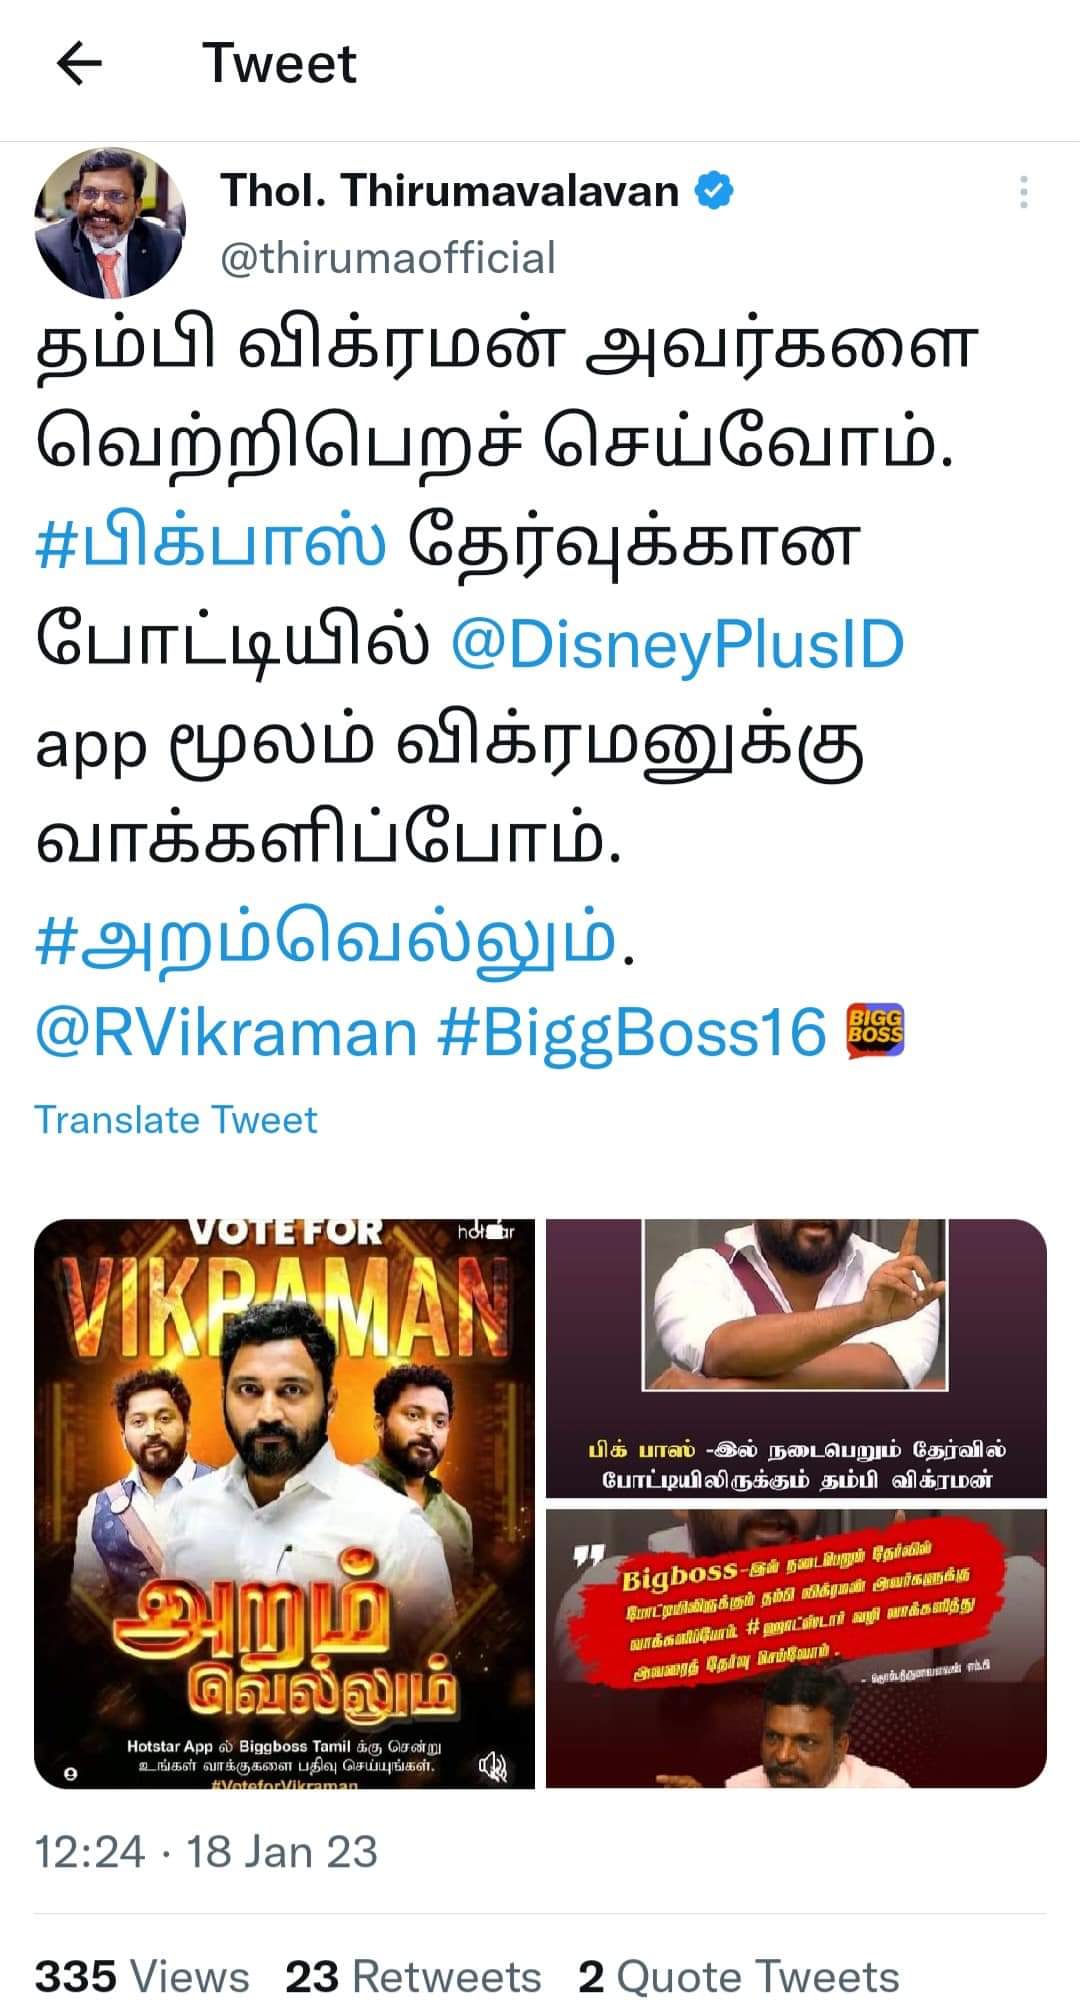 Thol thirumavalavan supportive tweet for BiggBoss Vikraman 